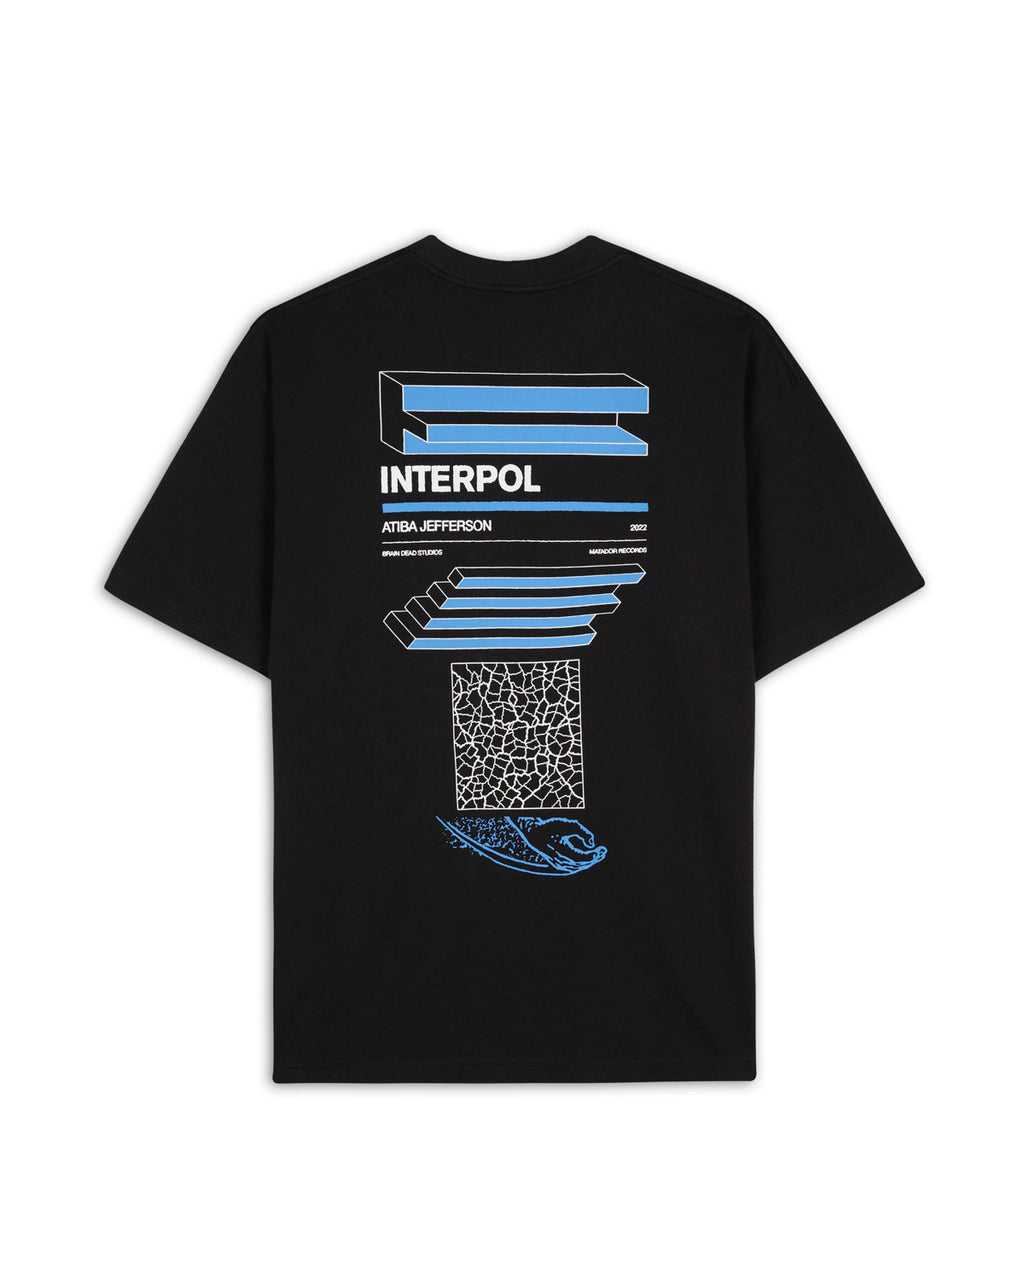 Brain Dead x Interpol Atiba Jefferson Photo #2 T-Shirt - Black 2